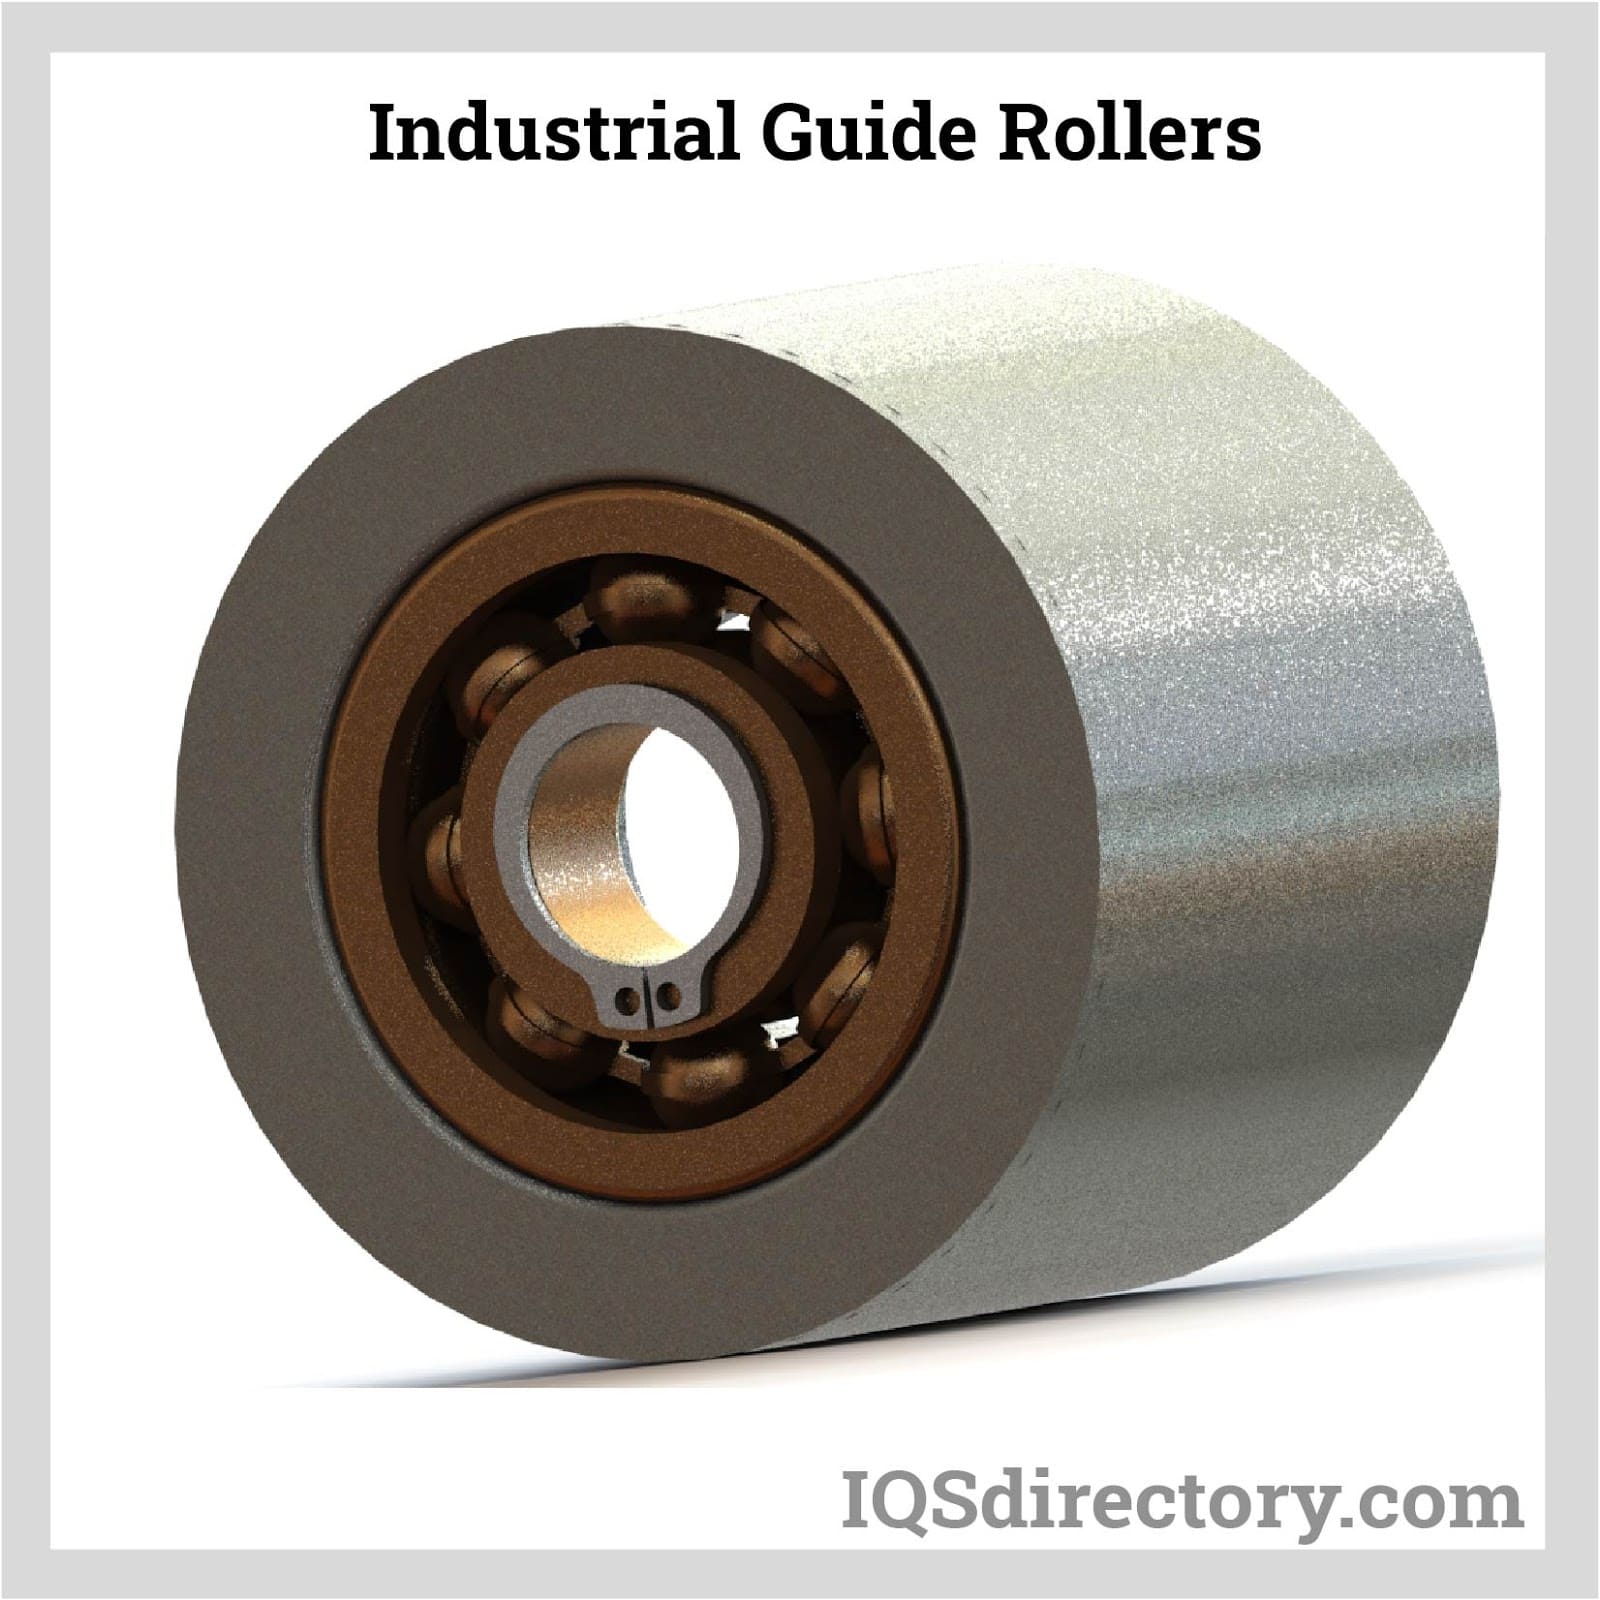 industrial guide rollers